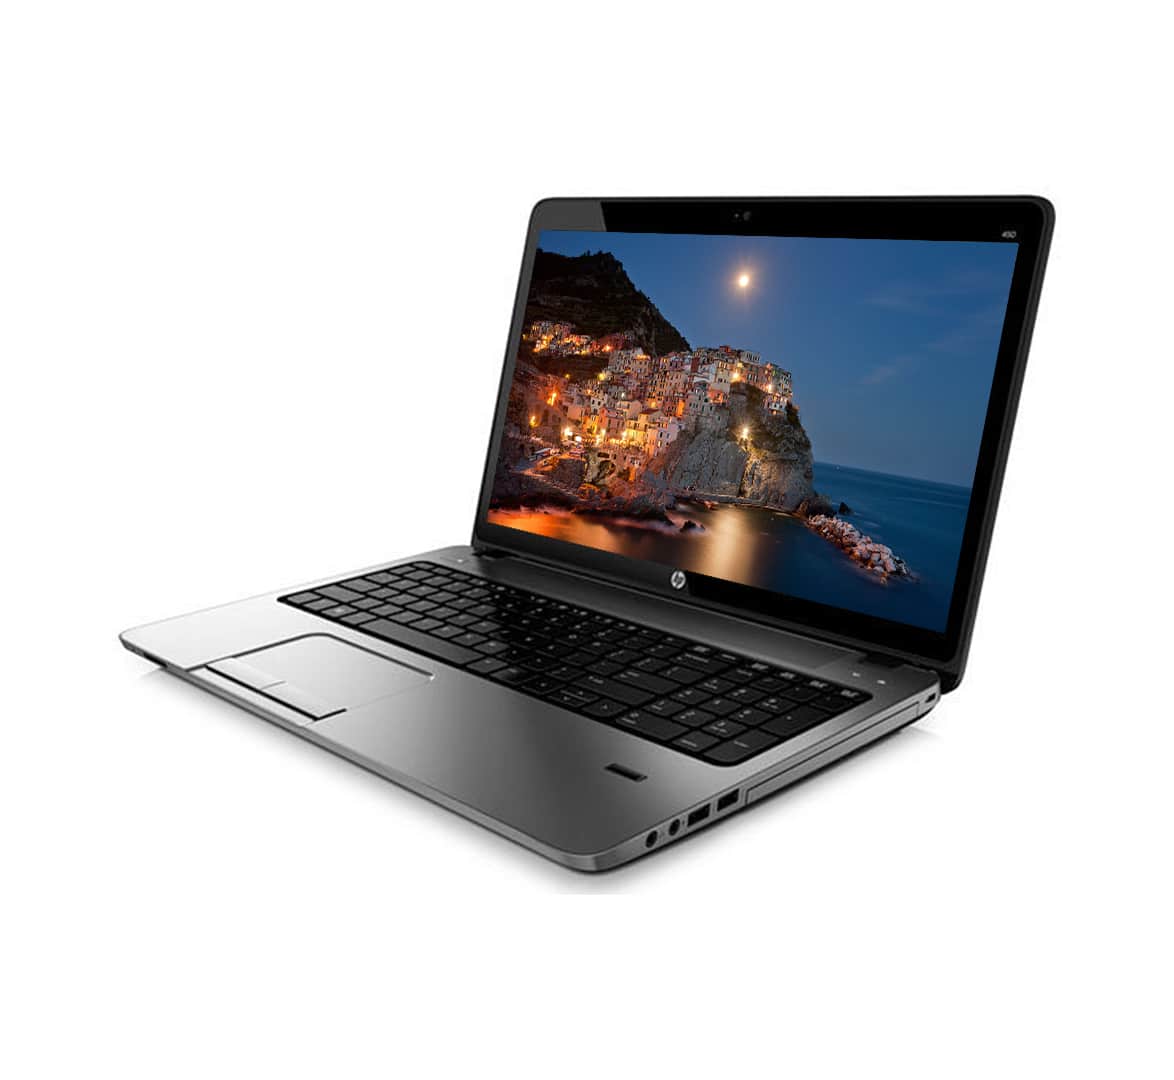 HP ProBook 450 G2 Business Laptop, Intel Core i5-4th Generation CPU, 4GB RAM, 500GB HDD, 15.6 inch Display, Windows 10 Pro, Refurbished Laptop